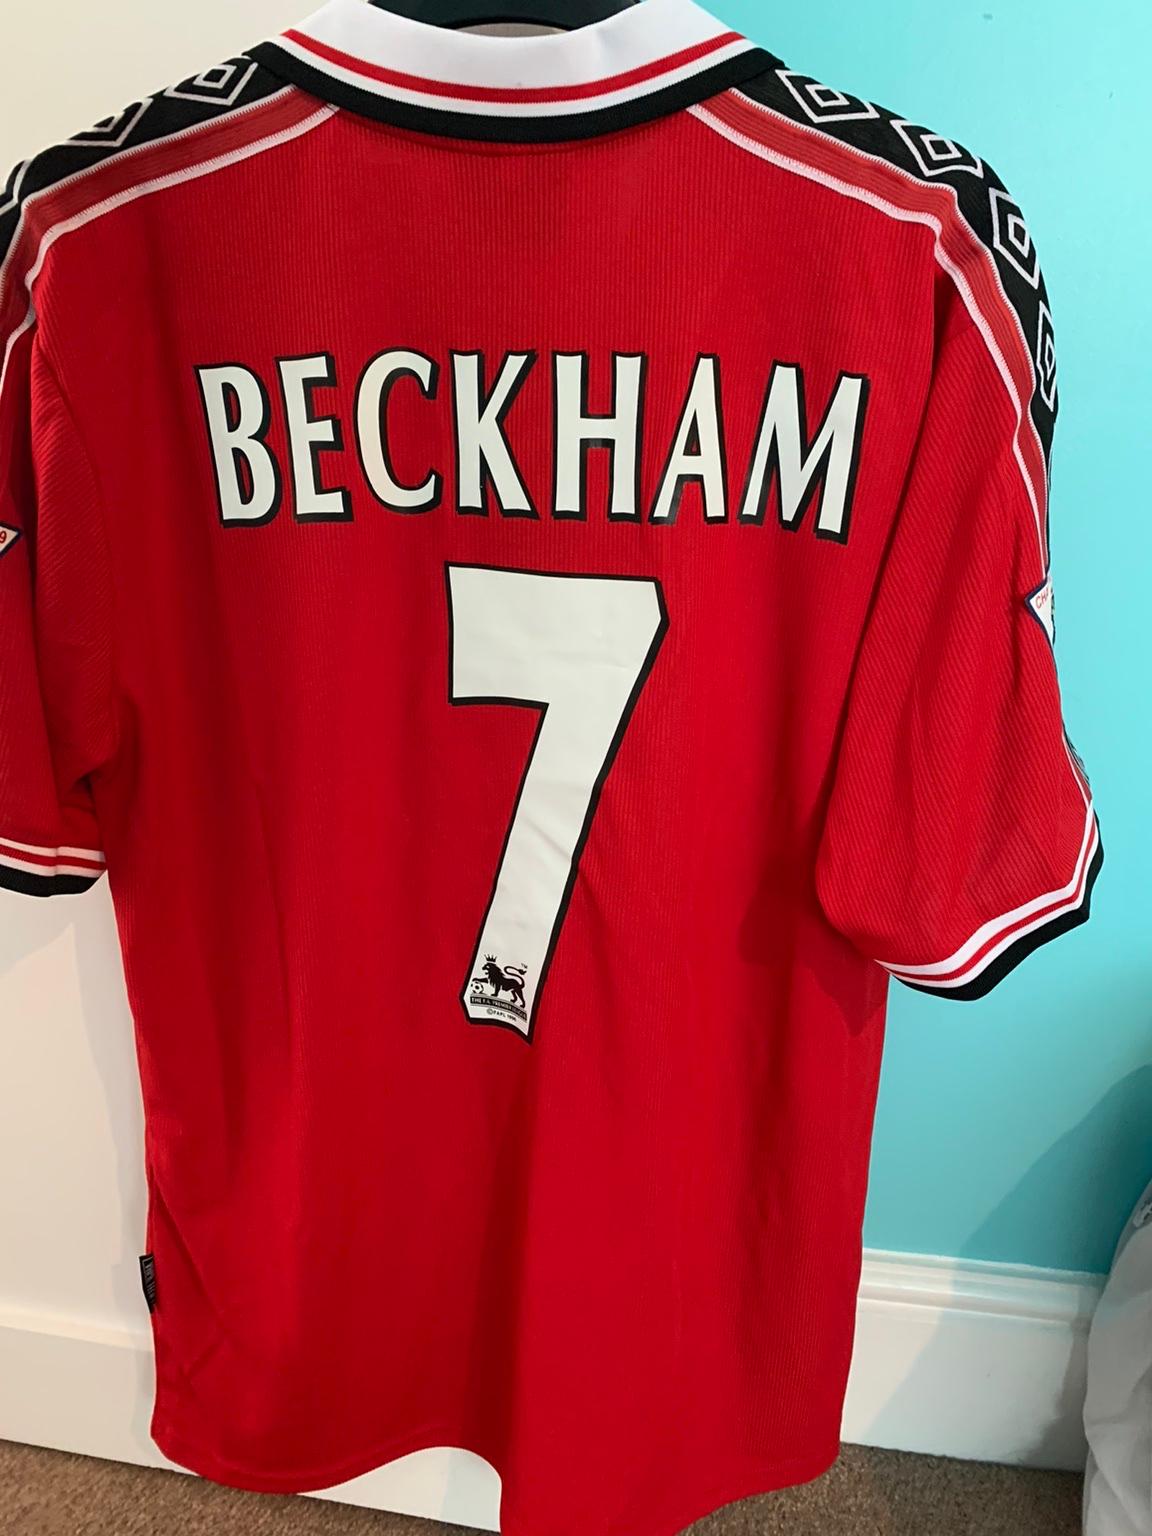 Man Utd 98/99 XL Shirt Beckham in Walsall for £25.00 for sale | Shpock